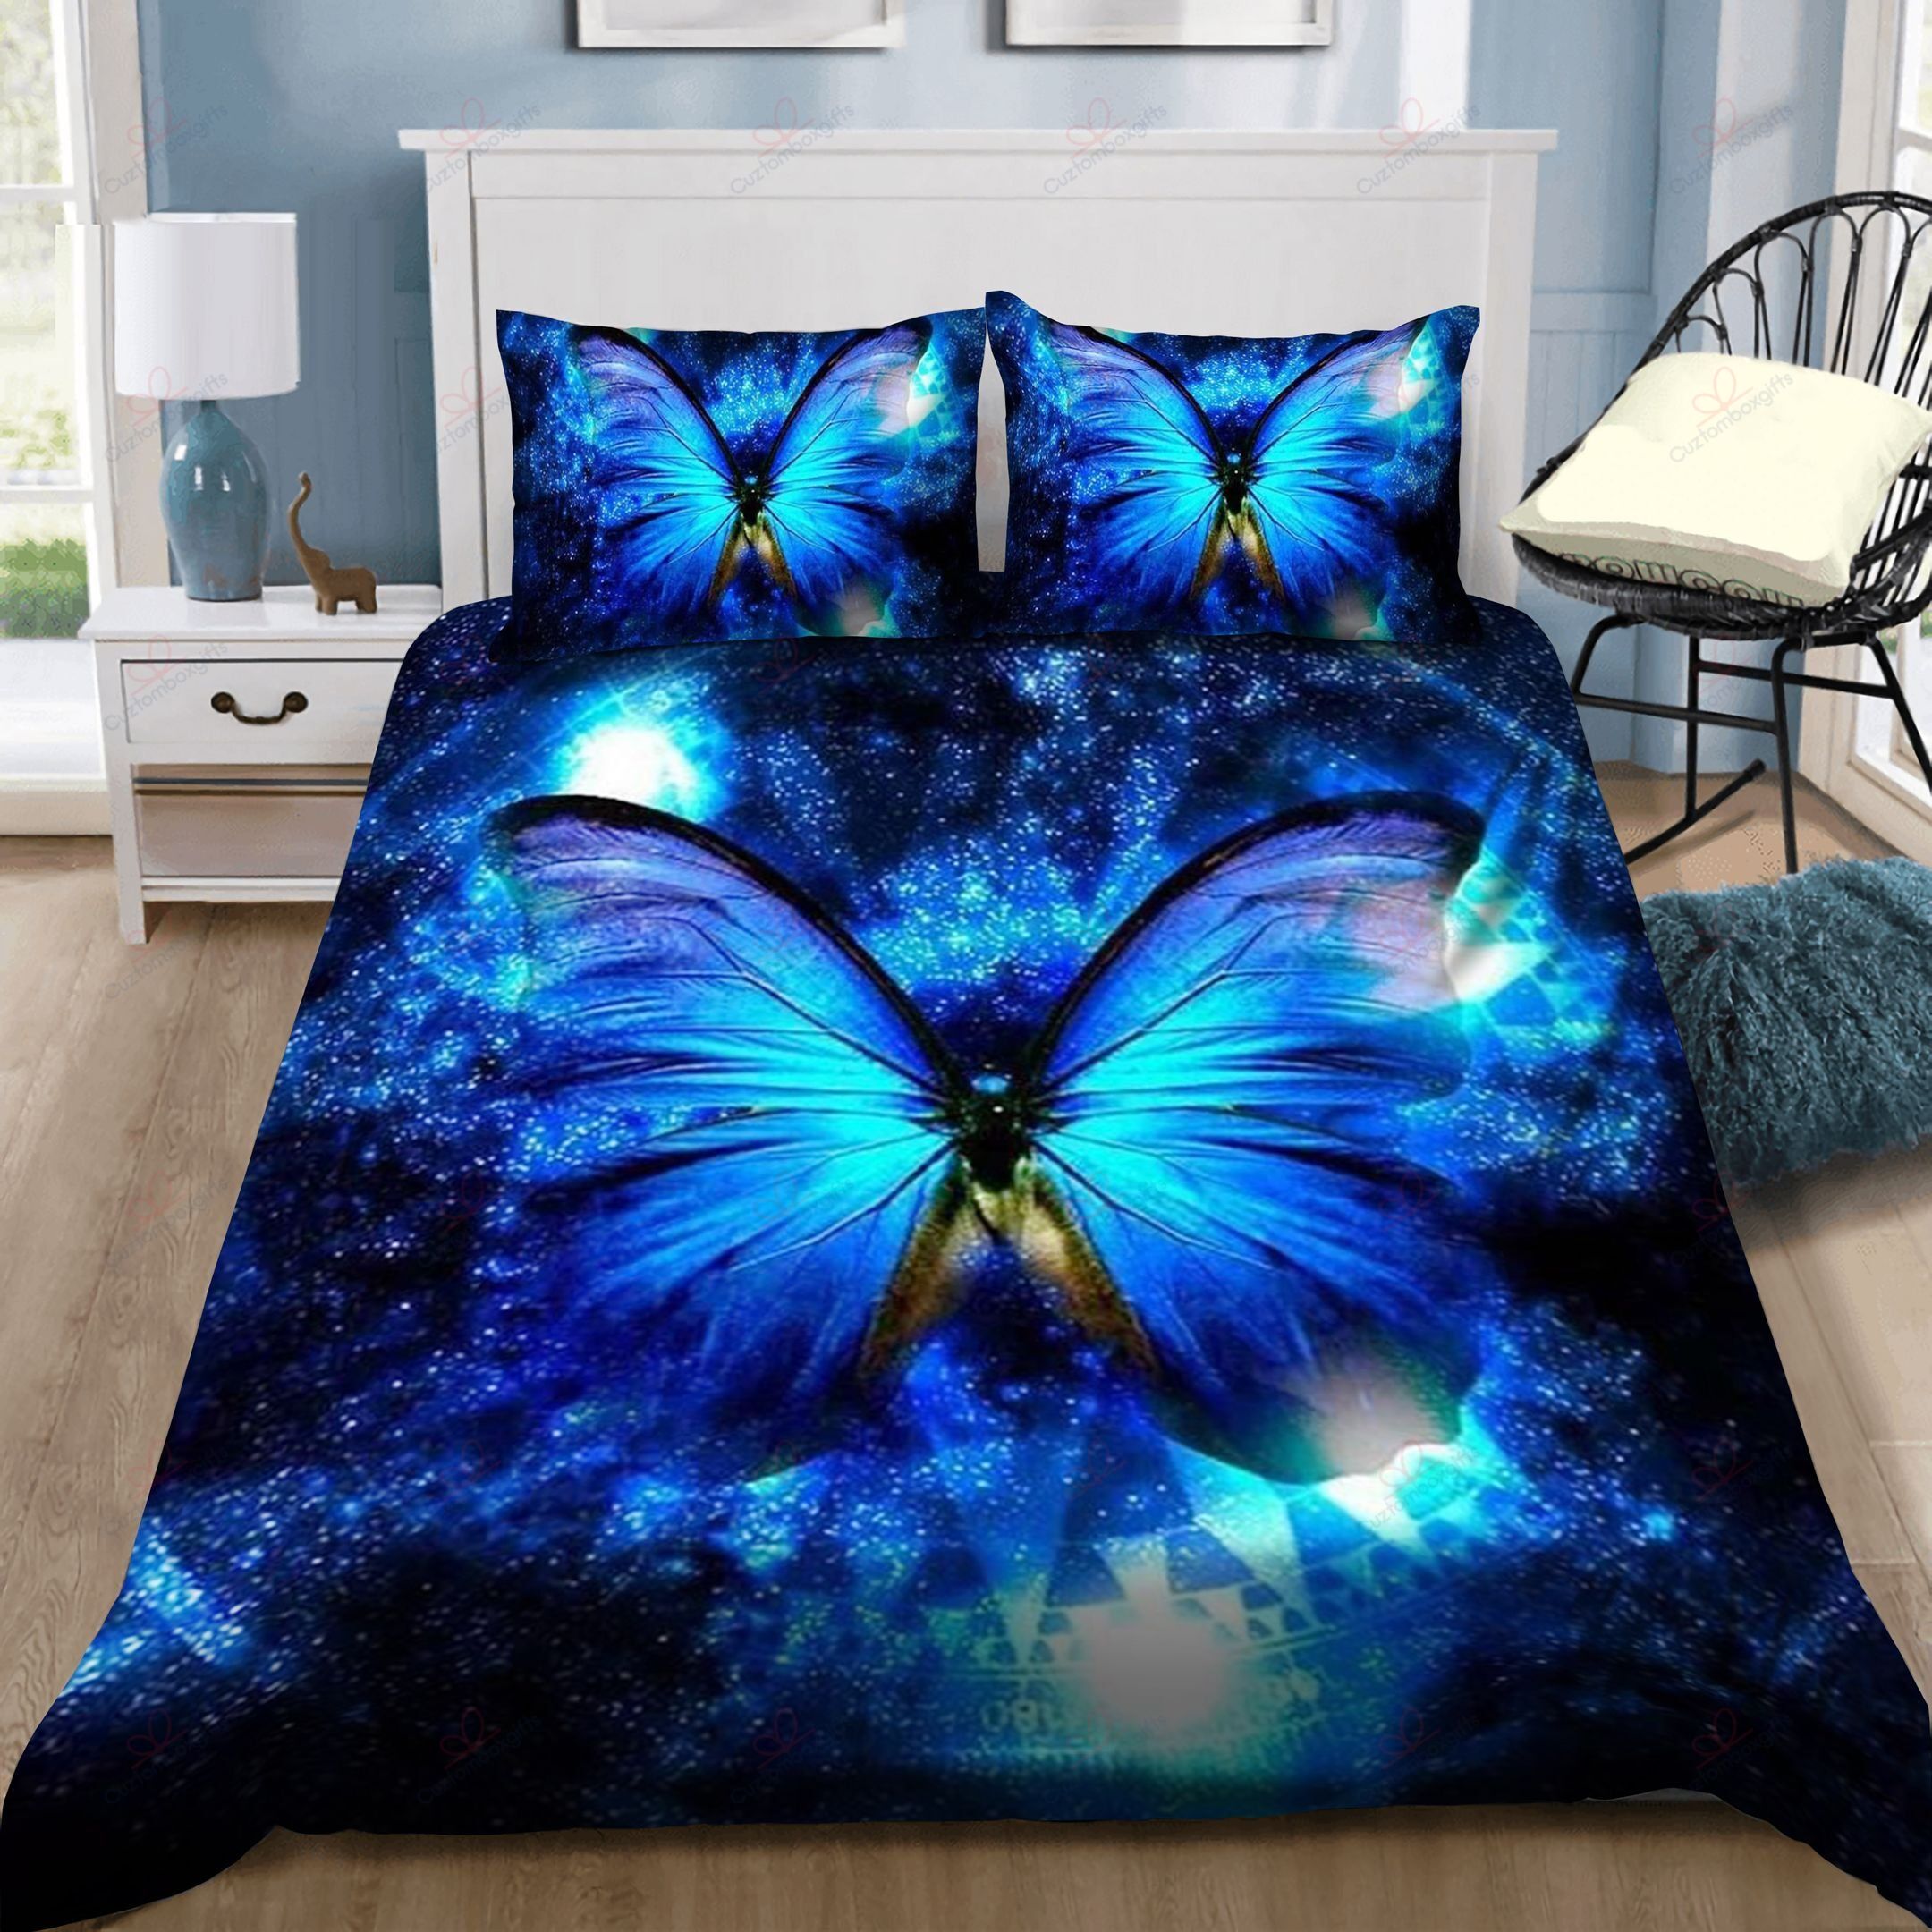 Glowing Blue Butterfly Bedding Sets TQOVFXNXK0 - Betiti Store